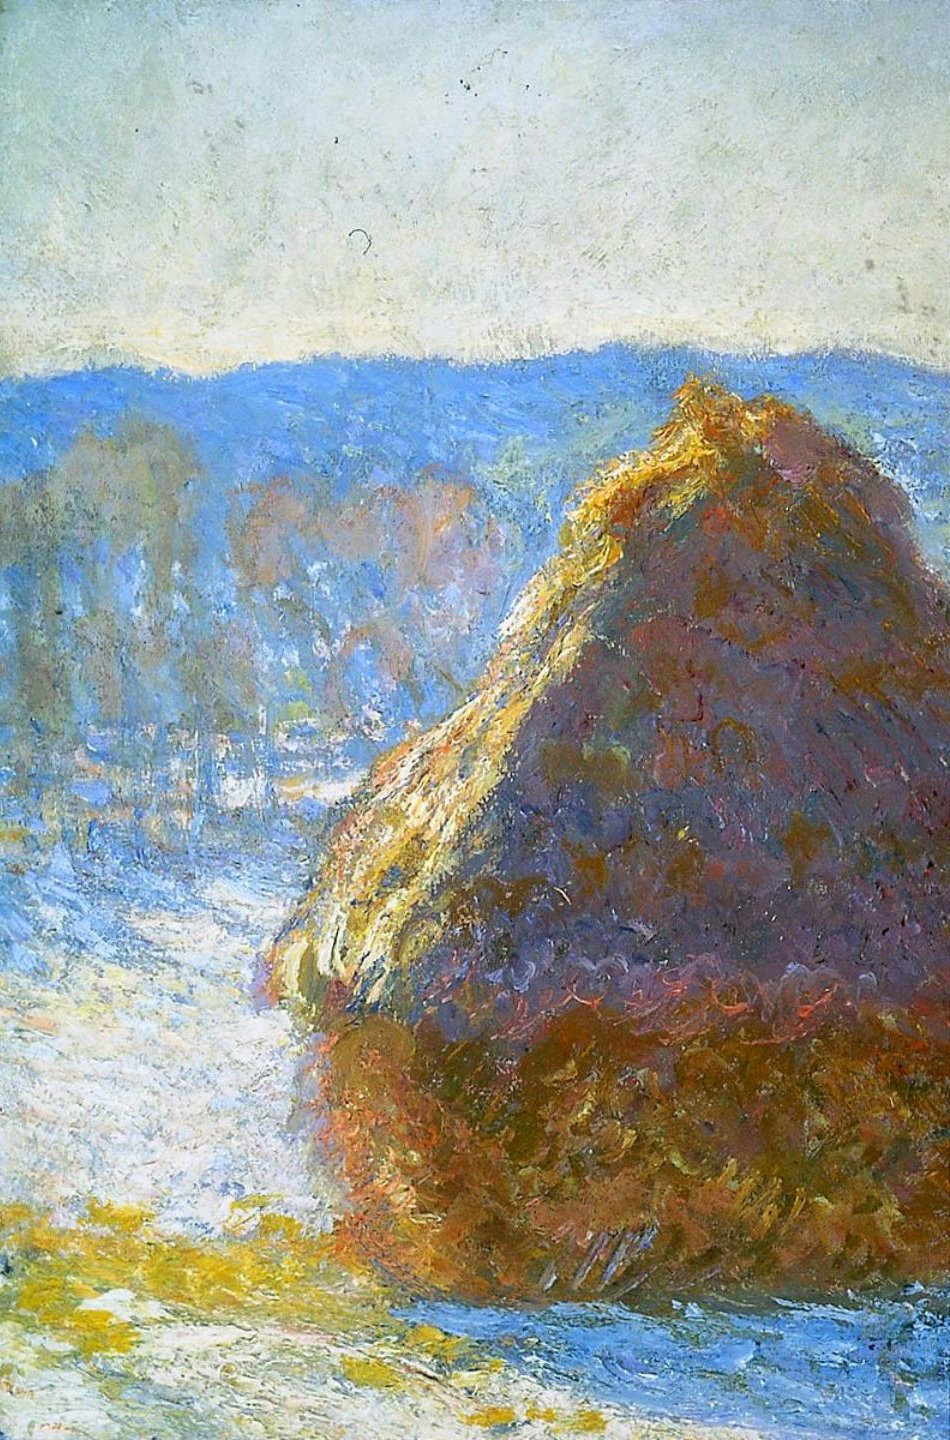 Claude+Monet-1840-1926 (276).jpg